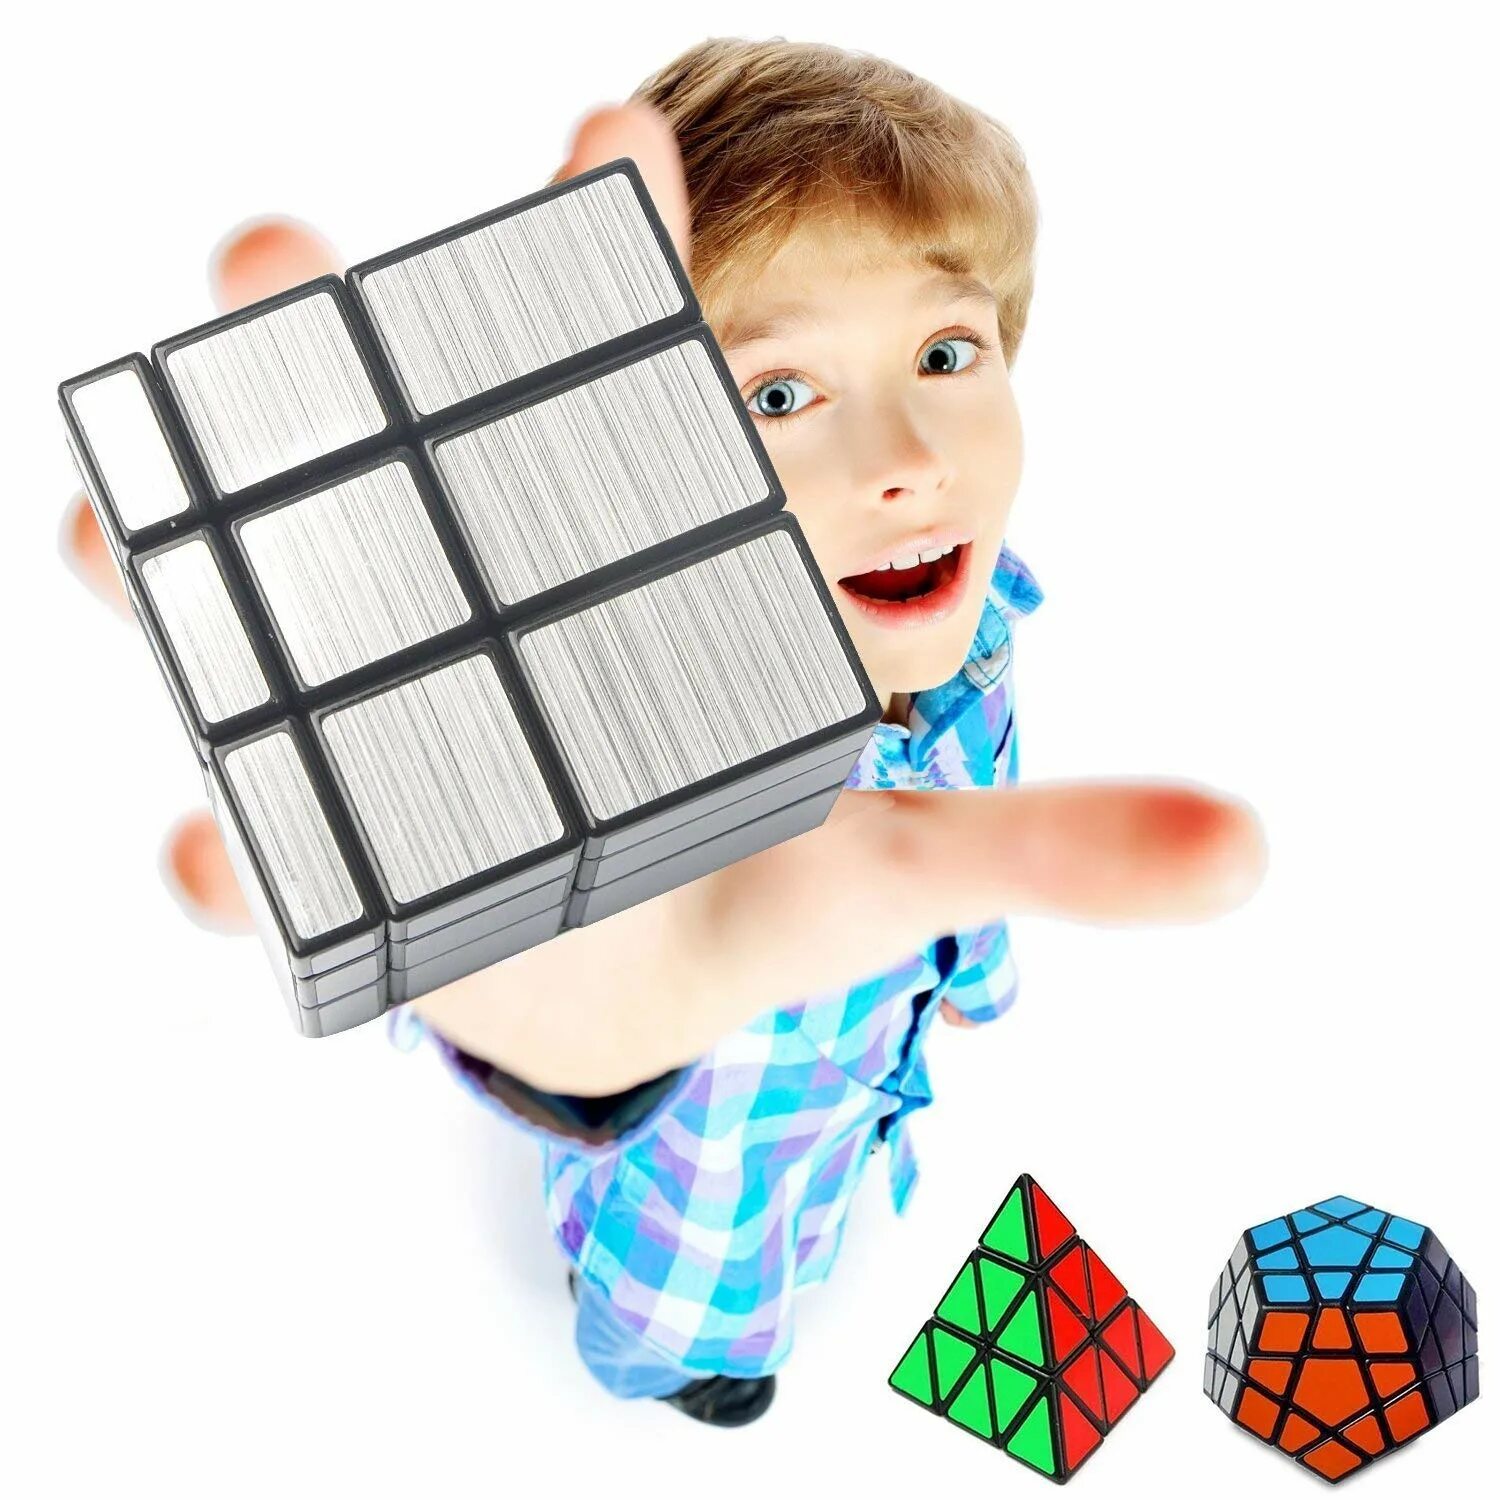 Кубик Рубика. Малыш с кубиком Рубика. Кубики рубики. Детская головоломка кубик.